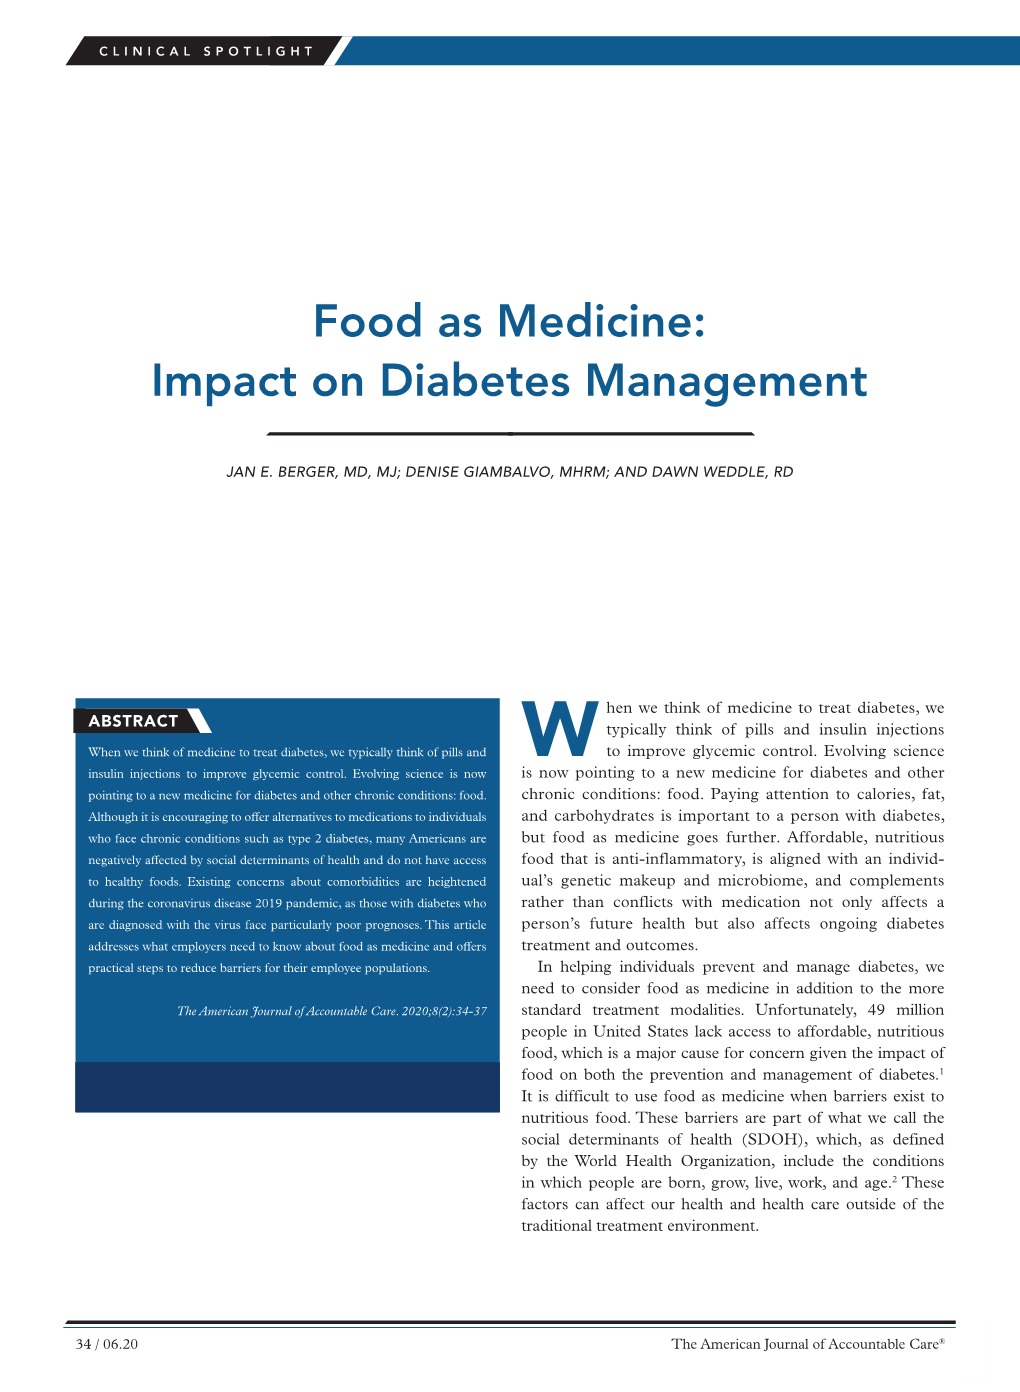 Food As Medicine: Impact on Diabetes Management